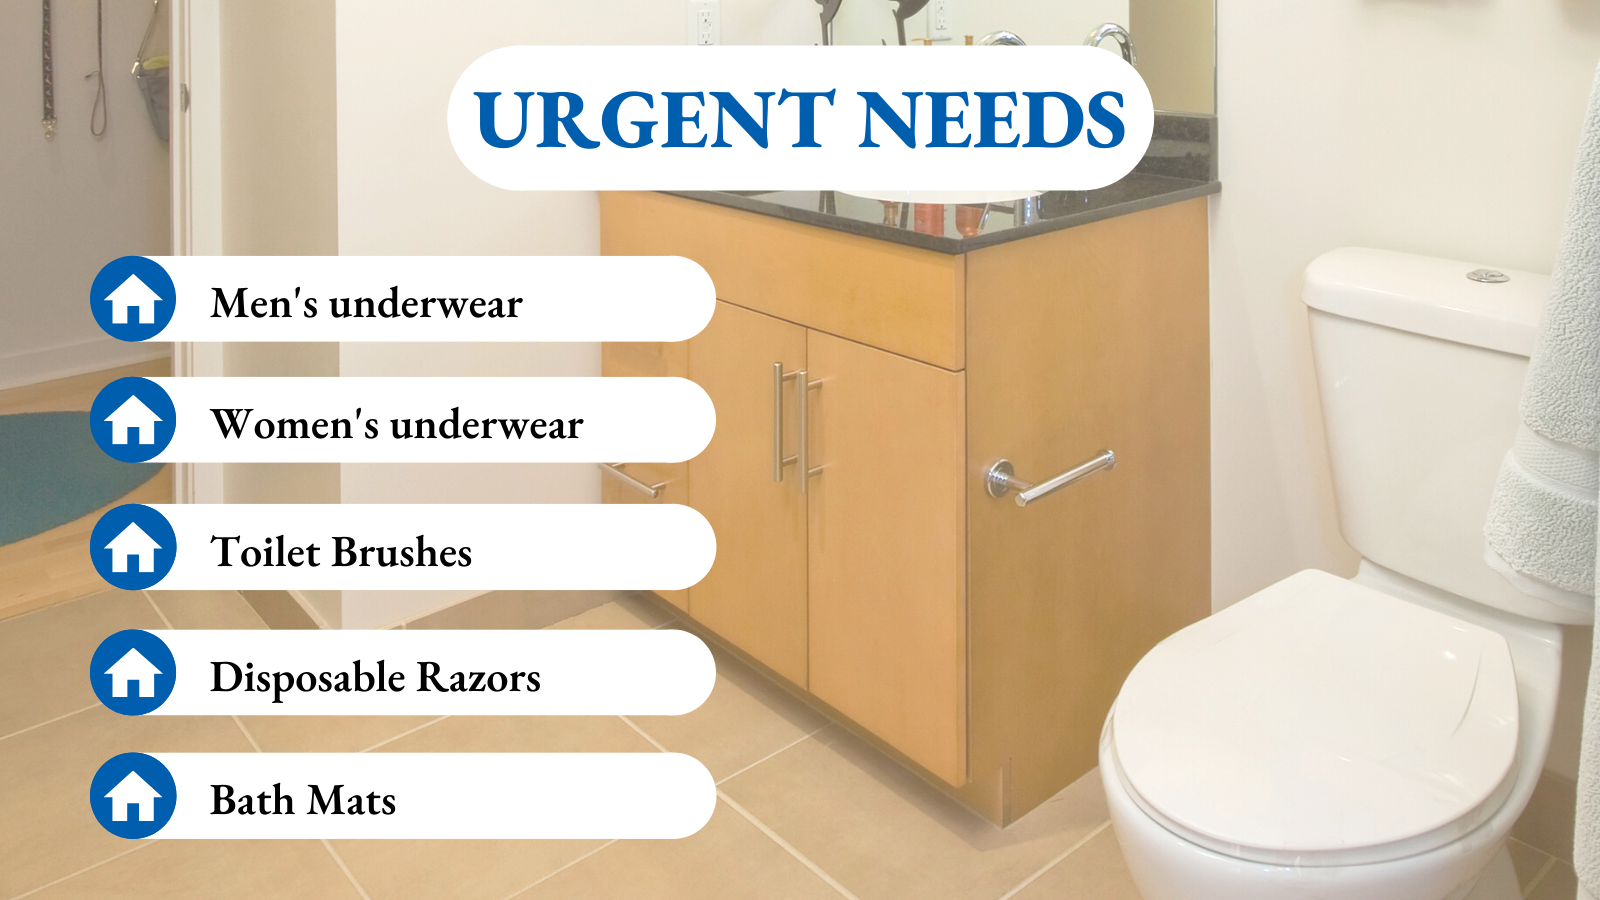 The Kitchen, Inc. Urgent Needs